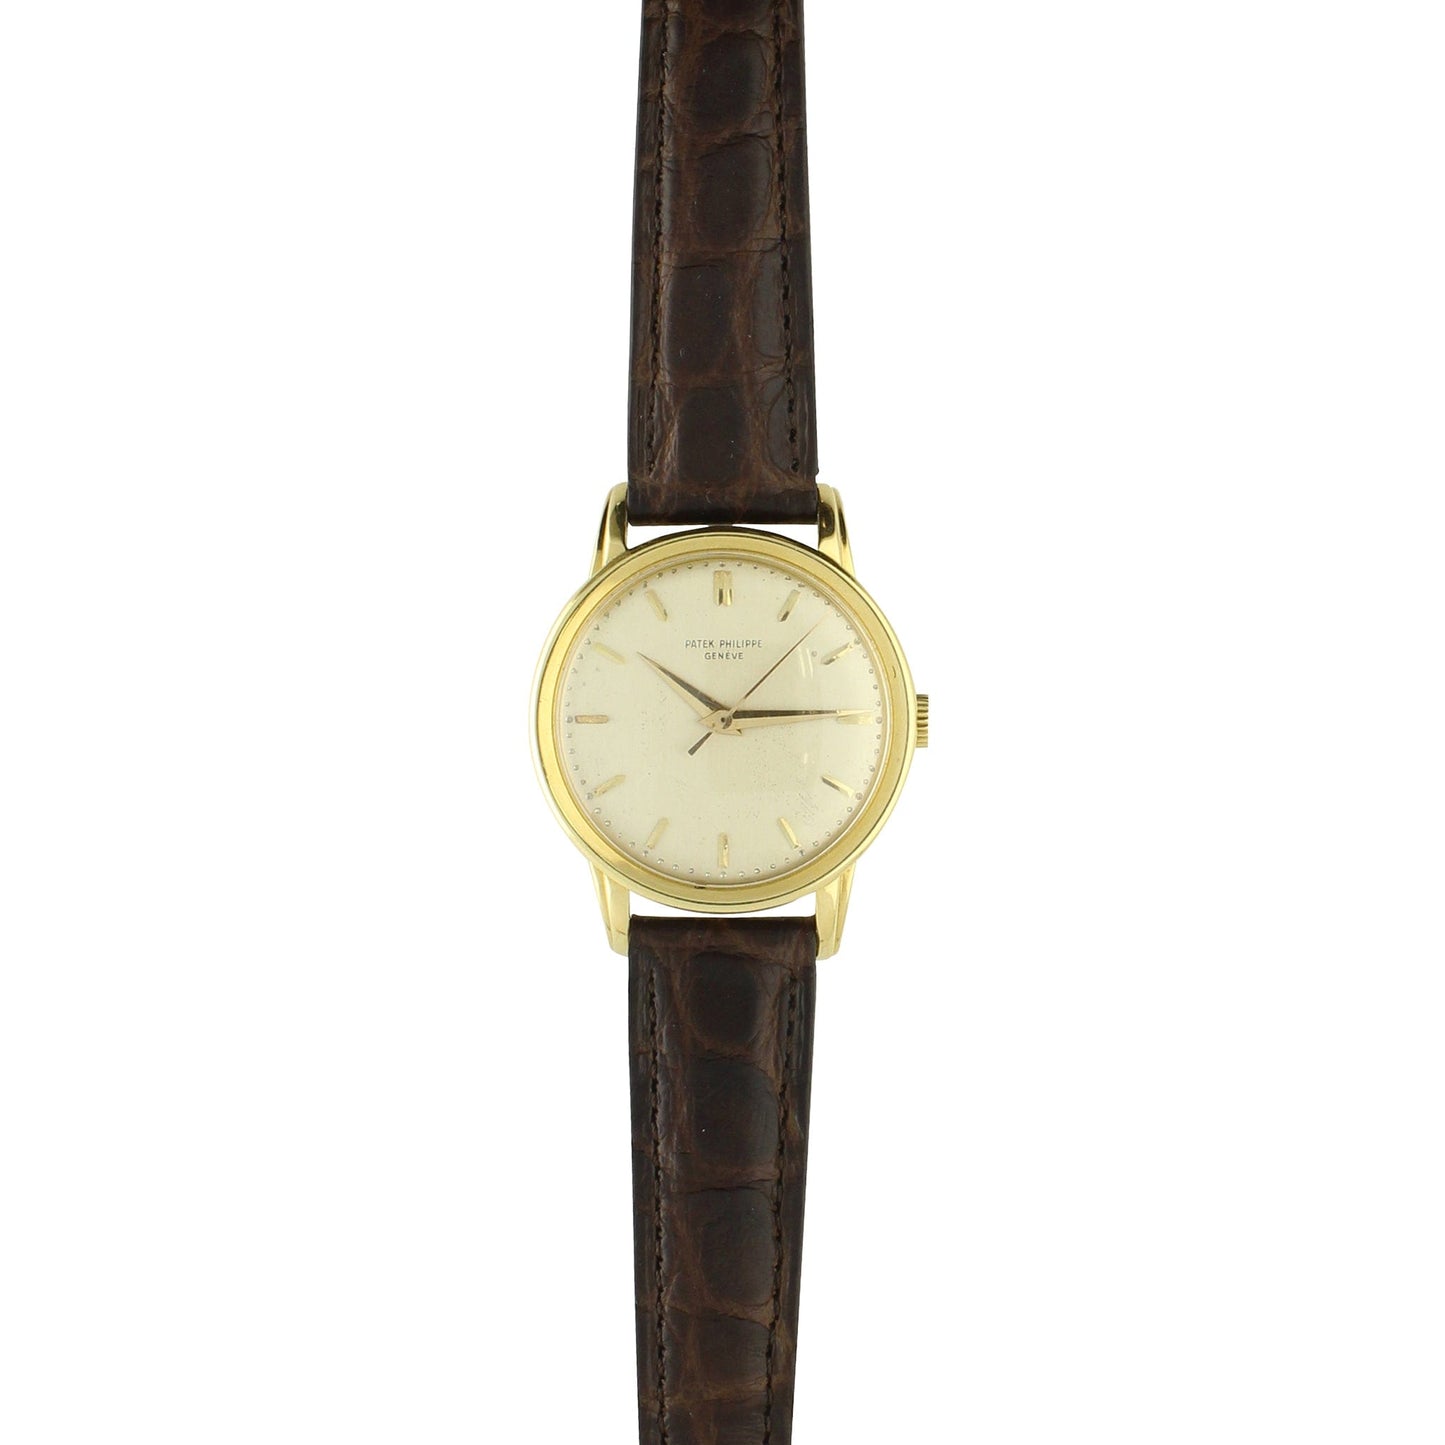 18ct yellow gold, reference 2481 'Oversize' Calatrava wristwatch. Made 1959